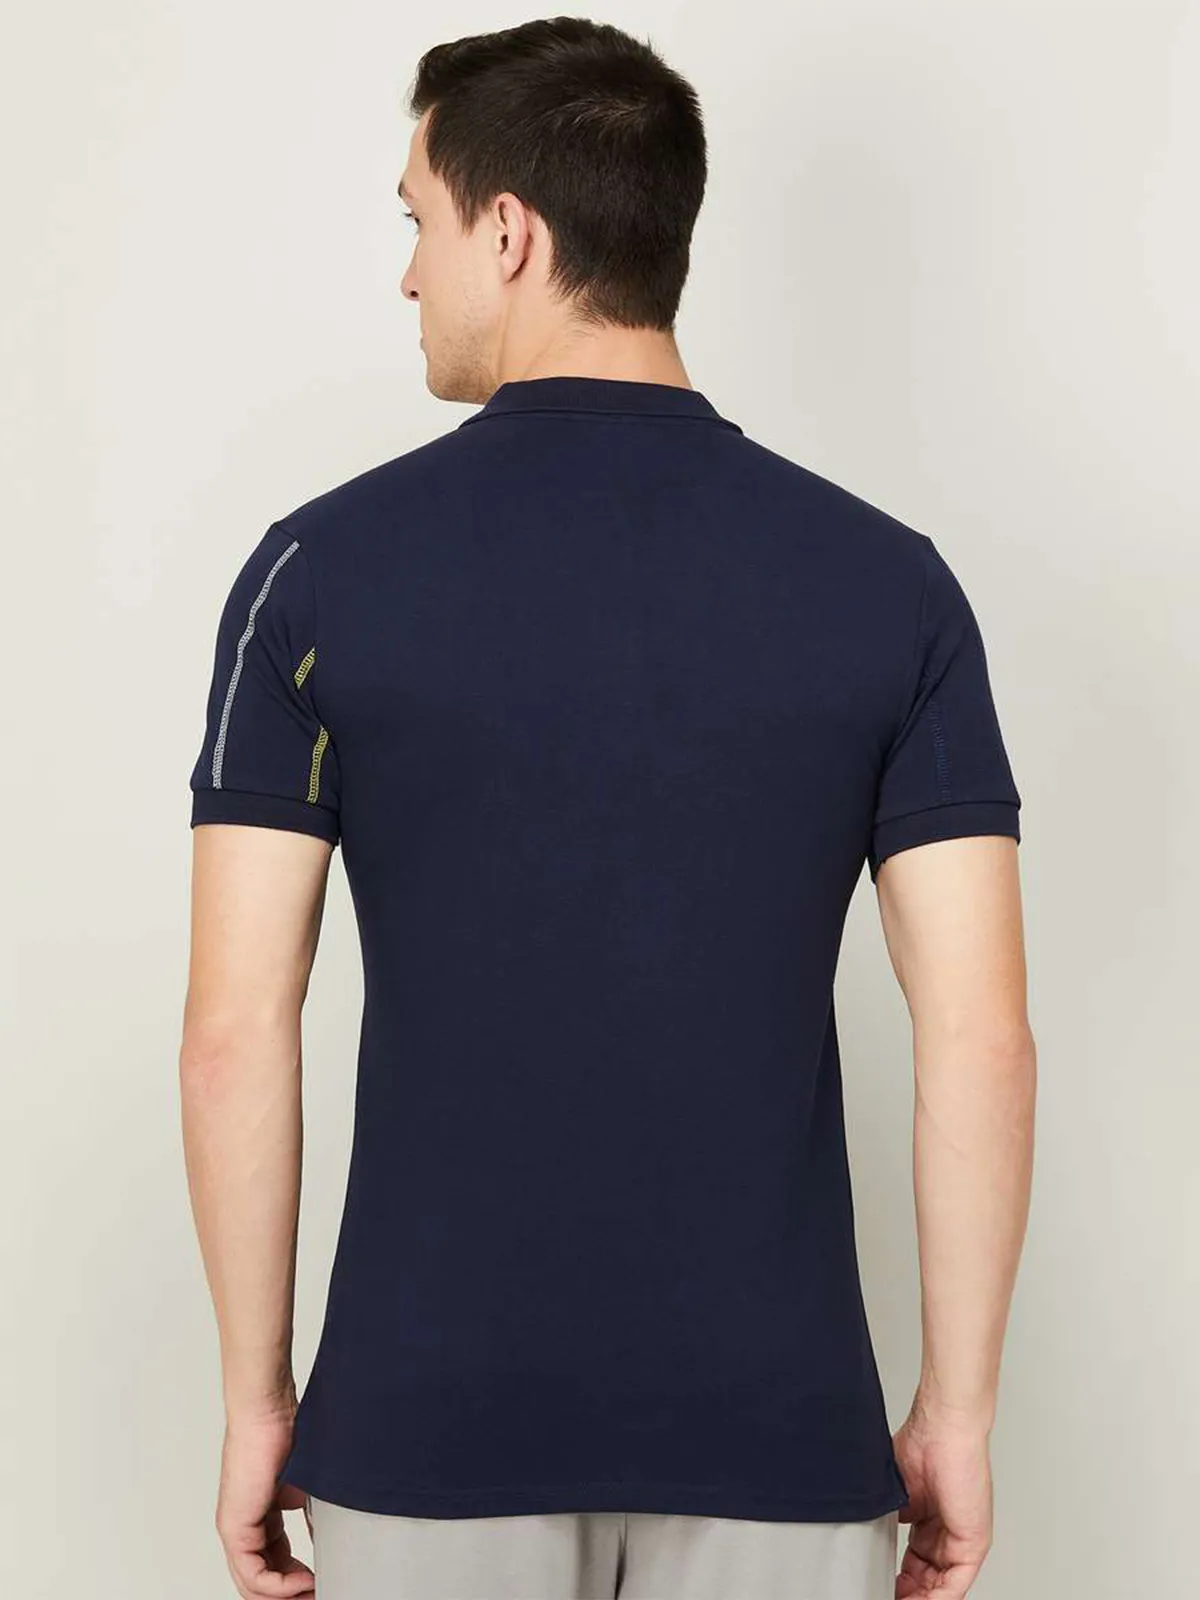 UCB cotton stripe slim fit navy t shirt